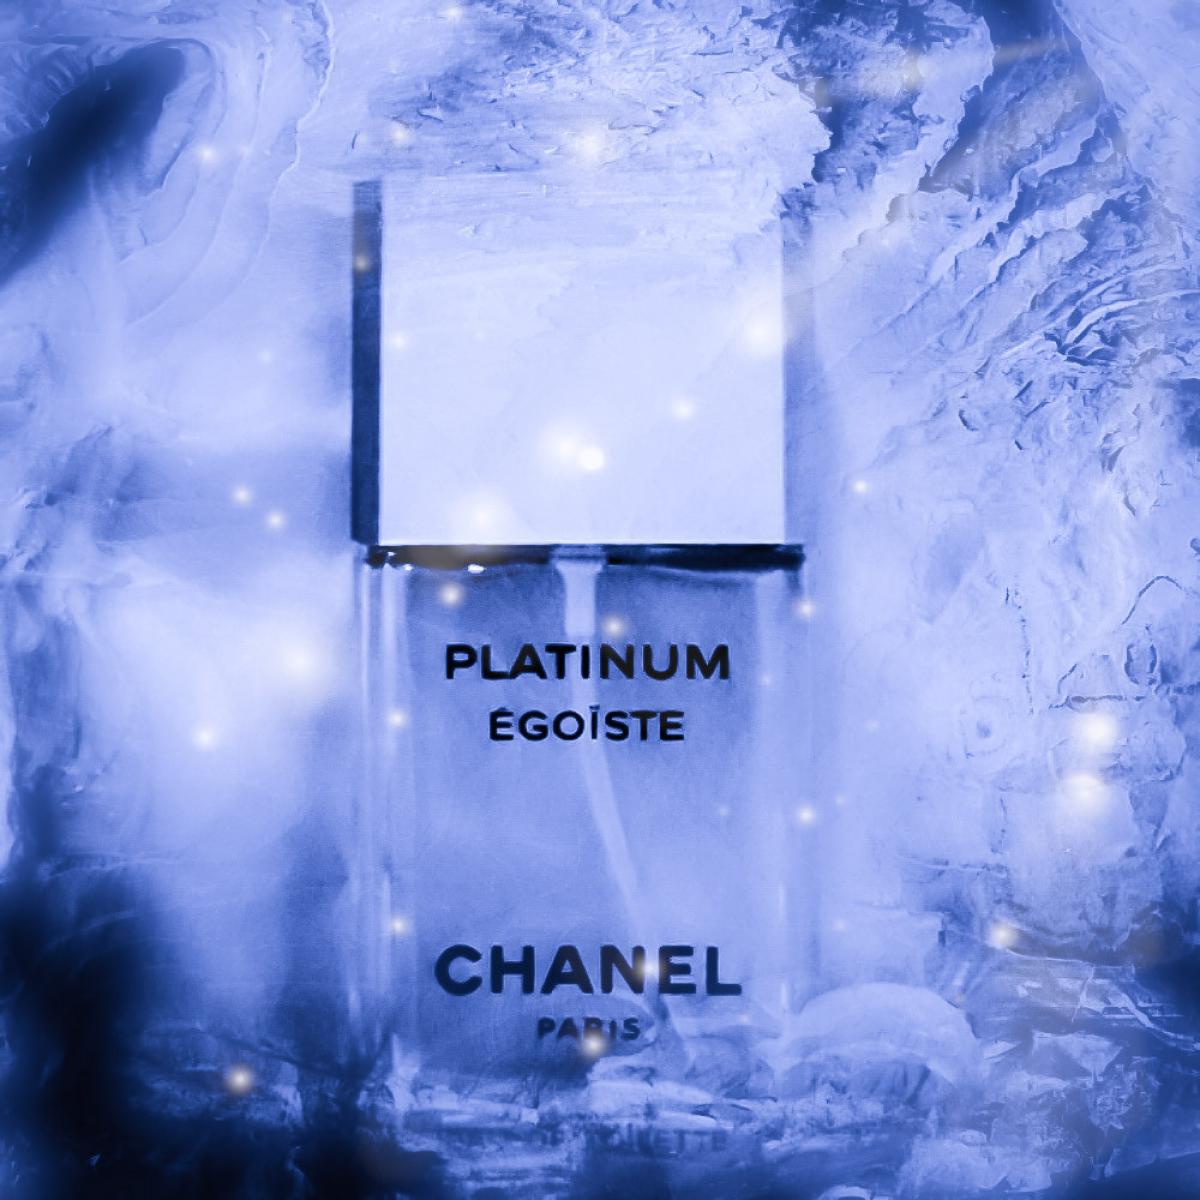 Платина реклама. Одеколон мужской Chanel Egoist Platinum. Шанель эгоист платинум реклама. Парфюм Platinum Egoiste мужские. Chanel Egoiste Platinum реклама.